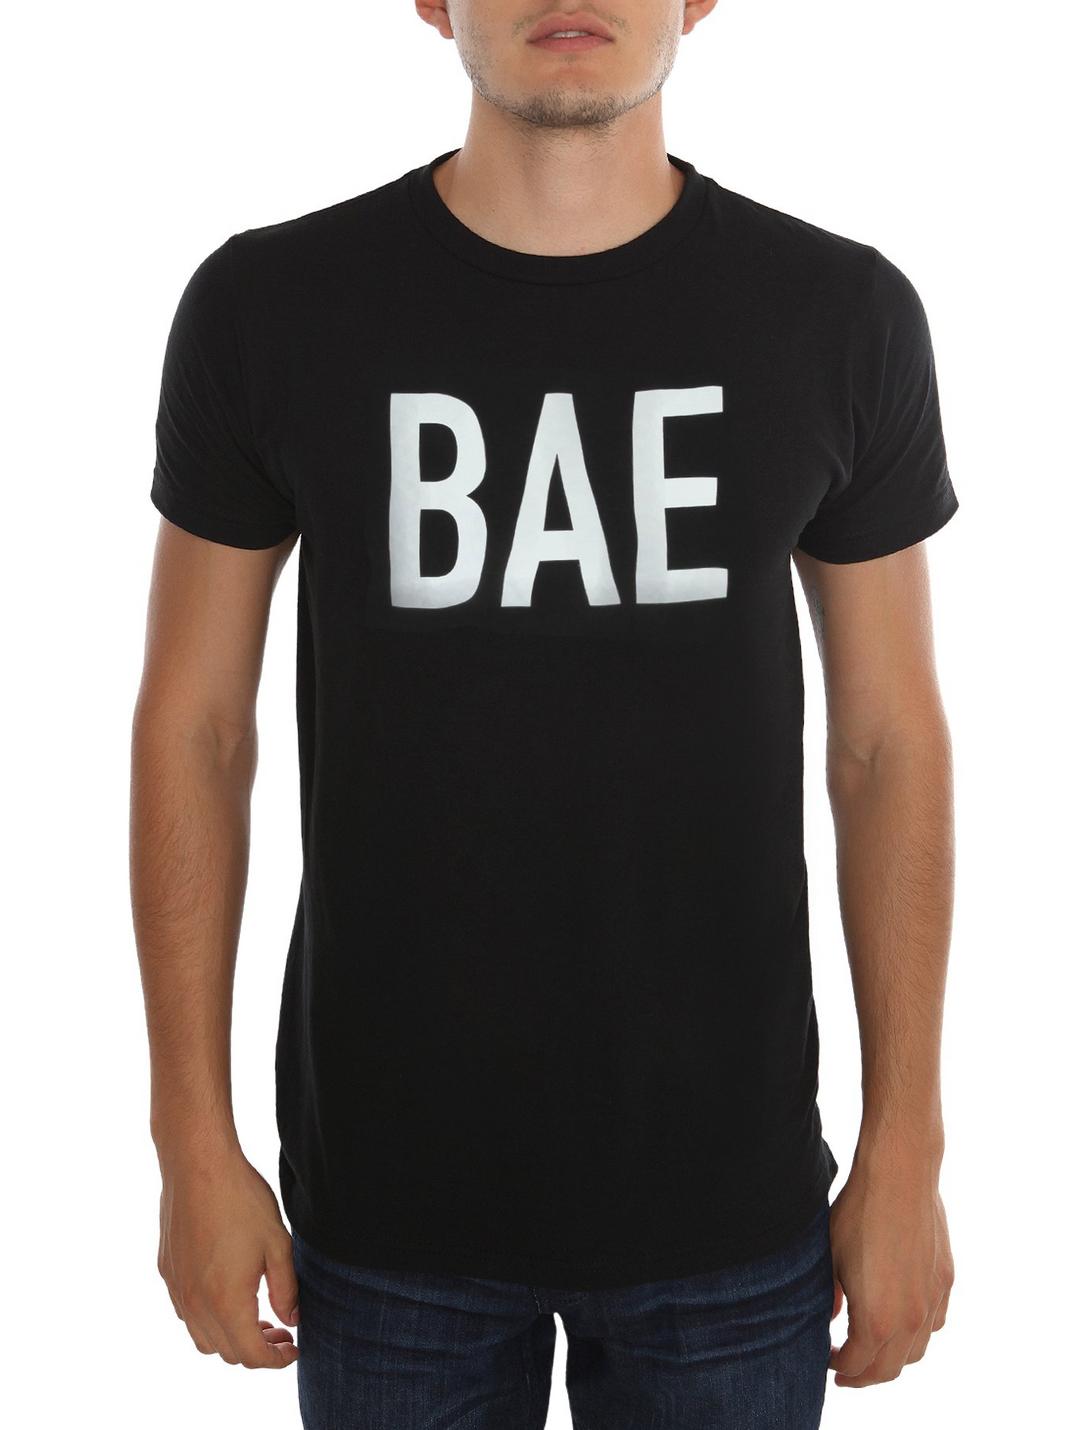 BAE T-Shirt, BLACK, hi-res